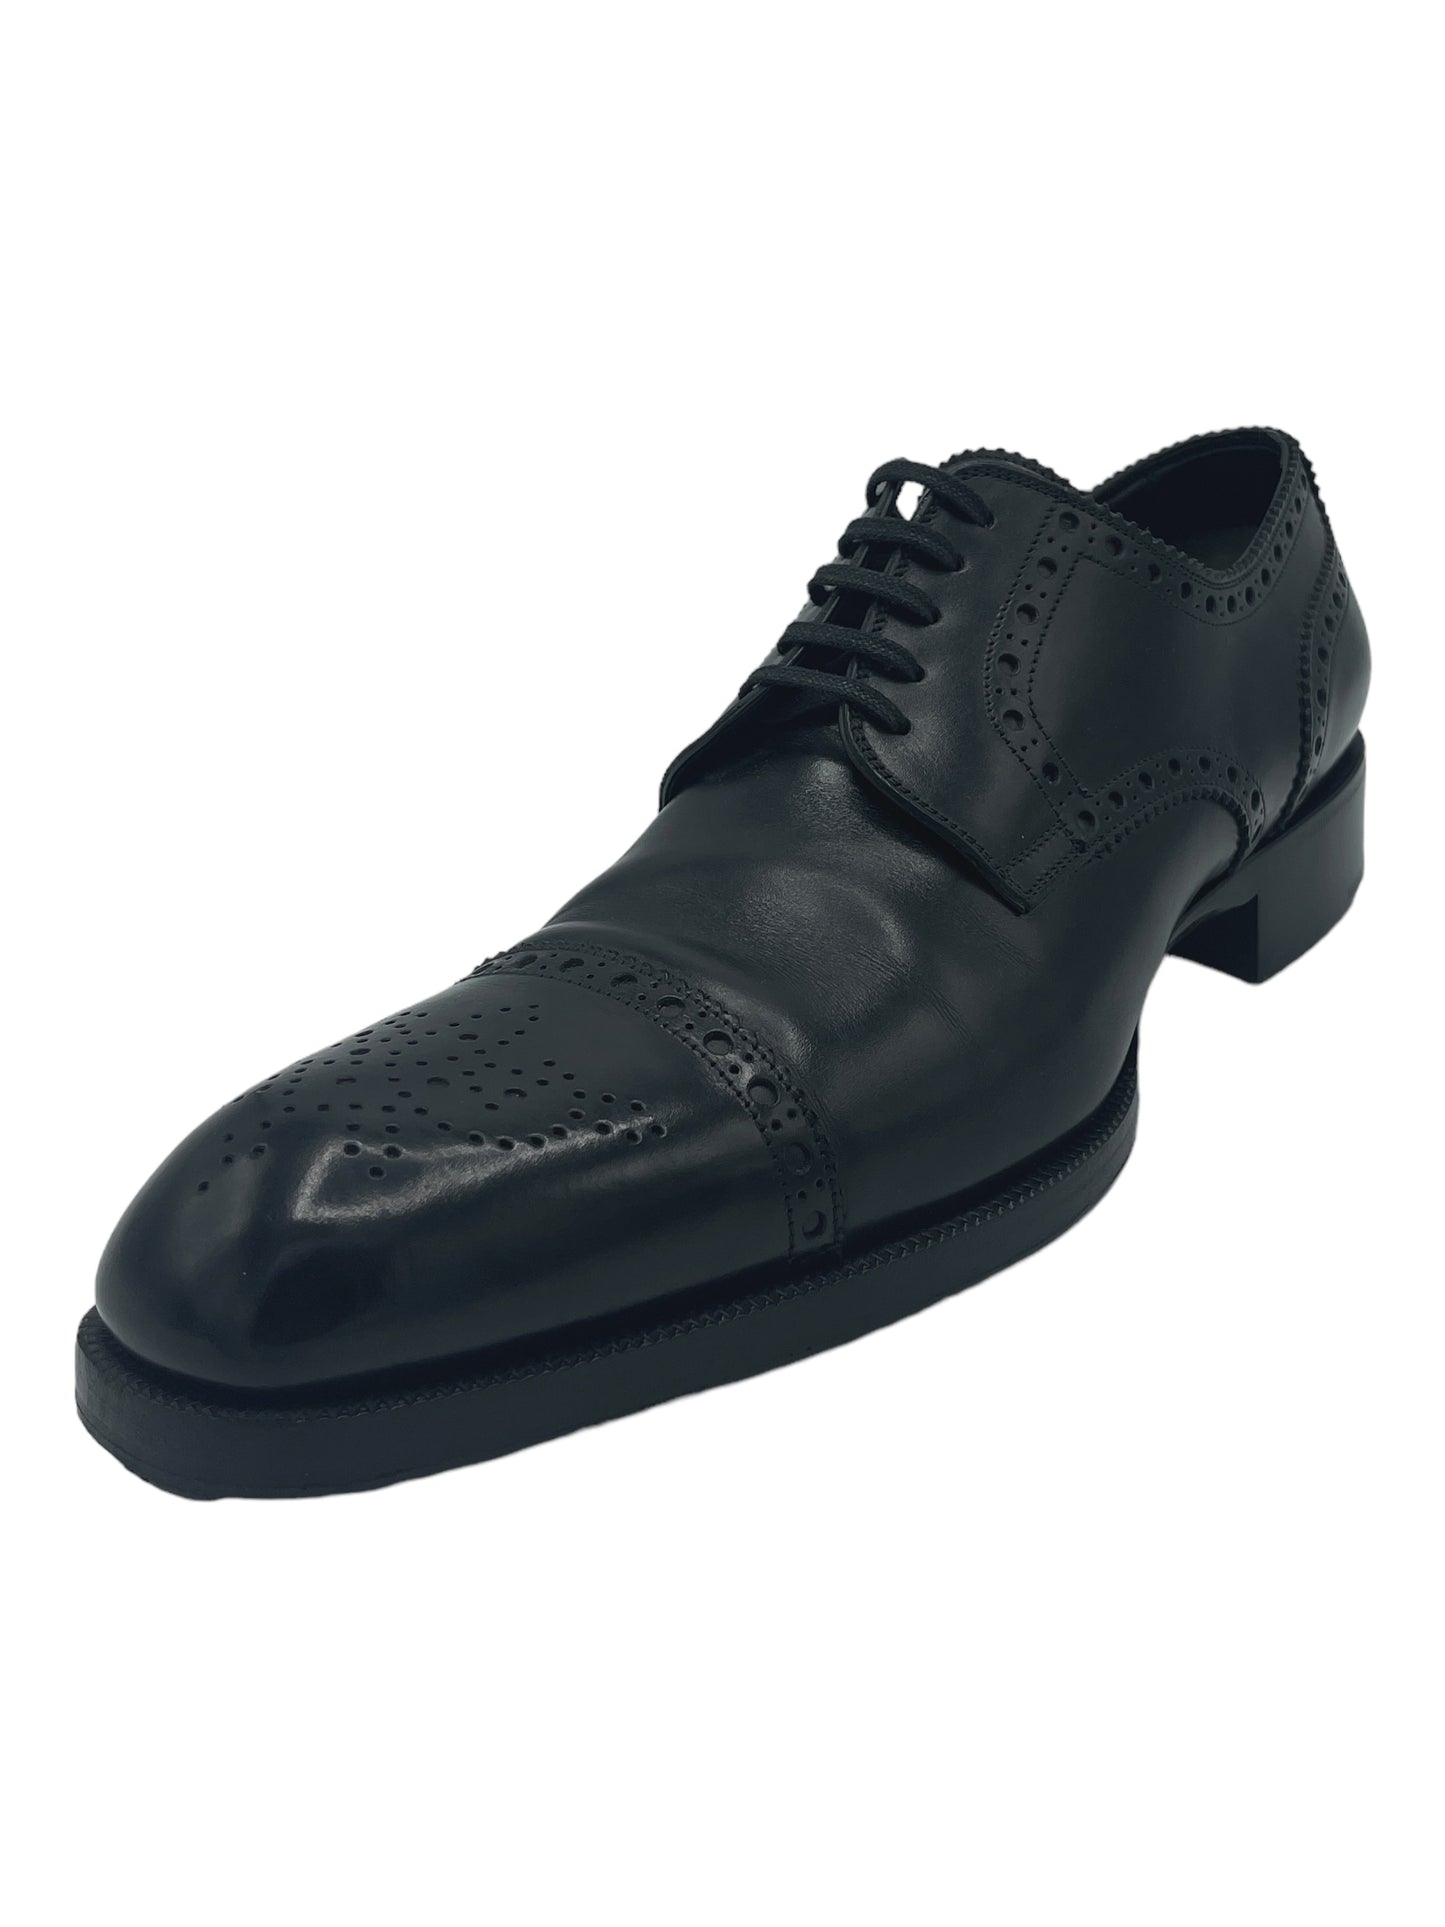 Tom Ford Black Brogue Cap Toe Derby Dress Shoes